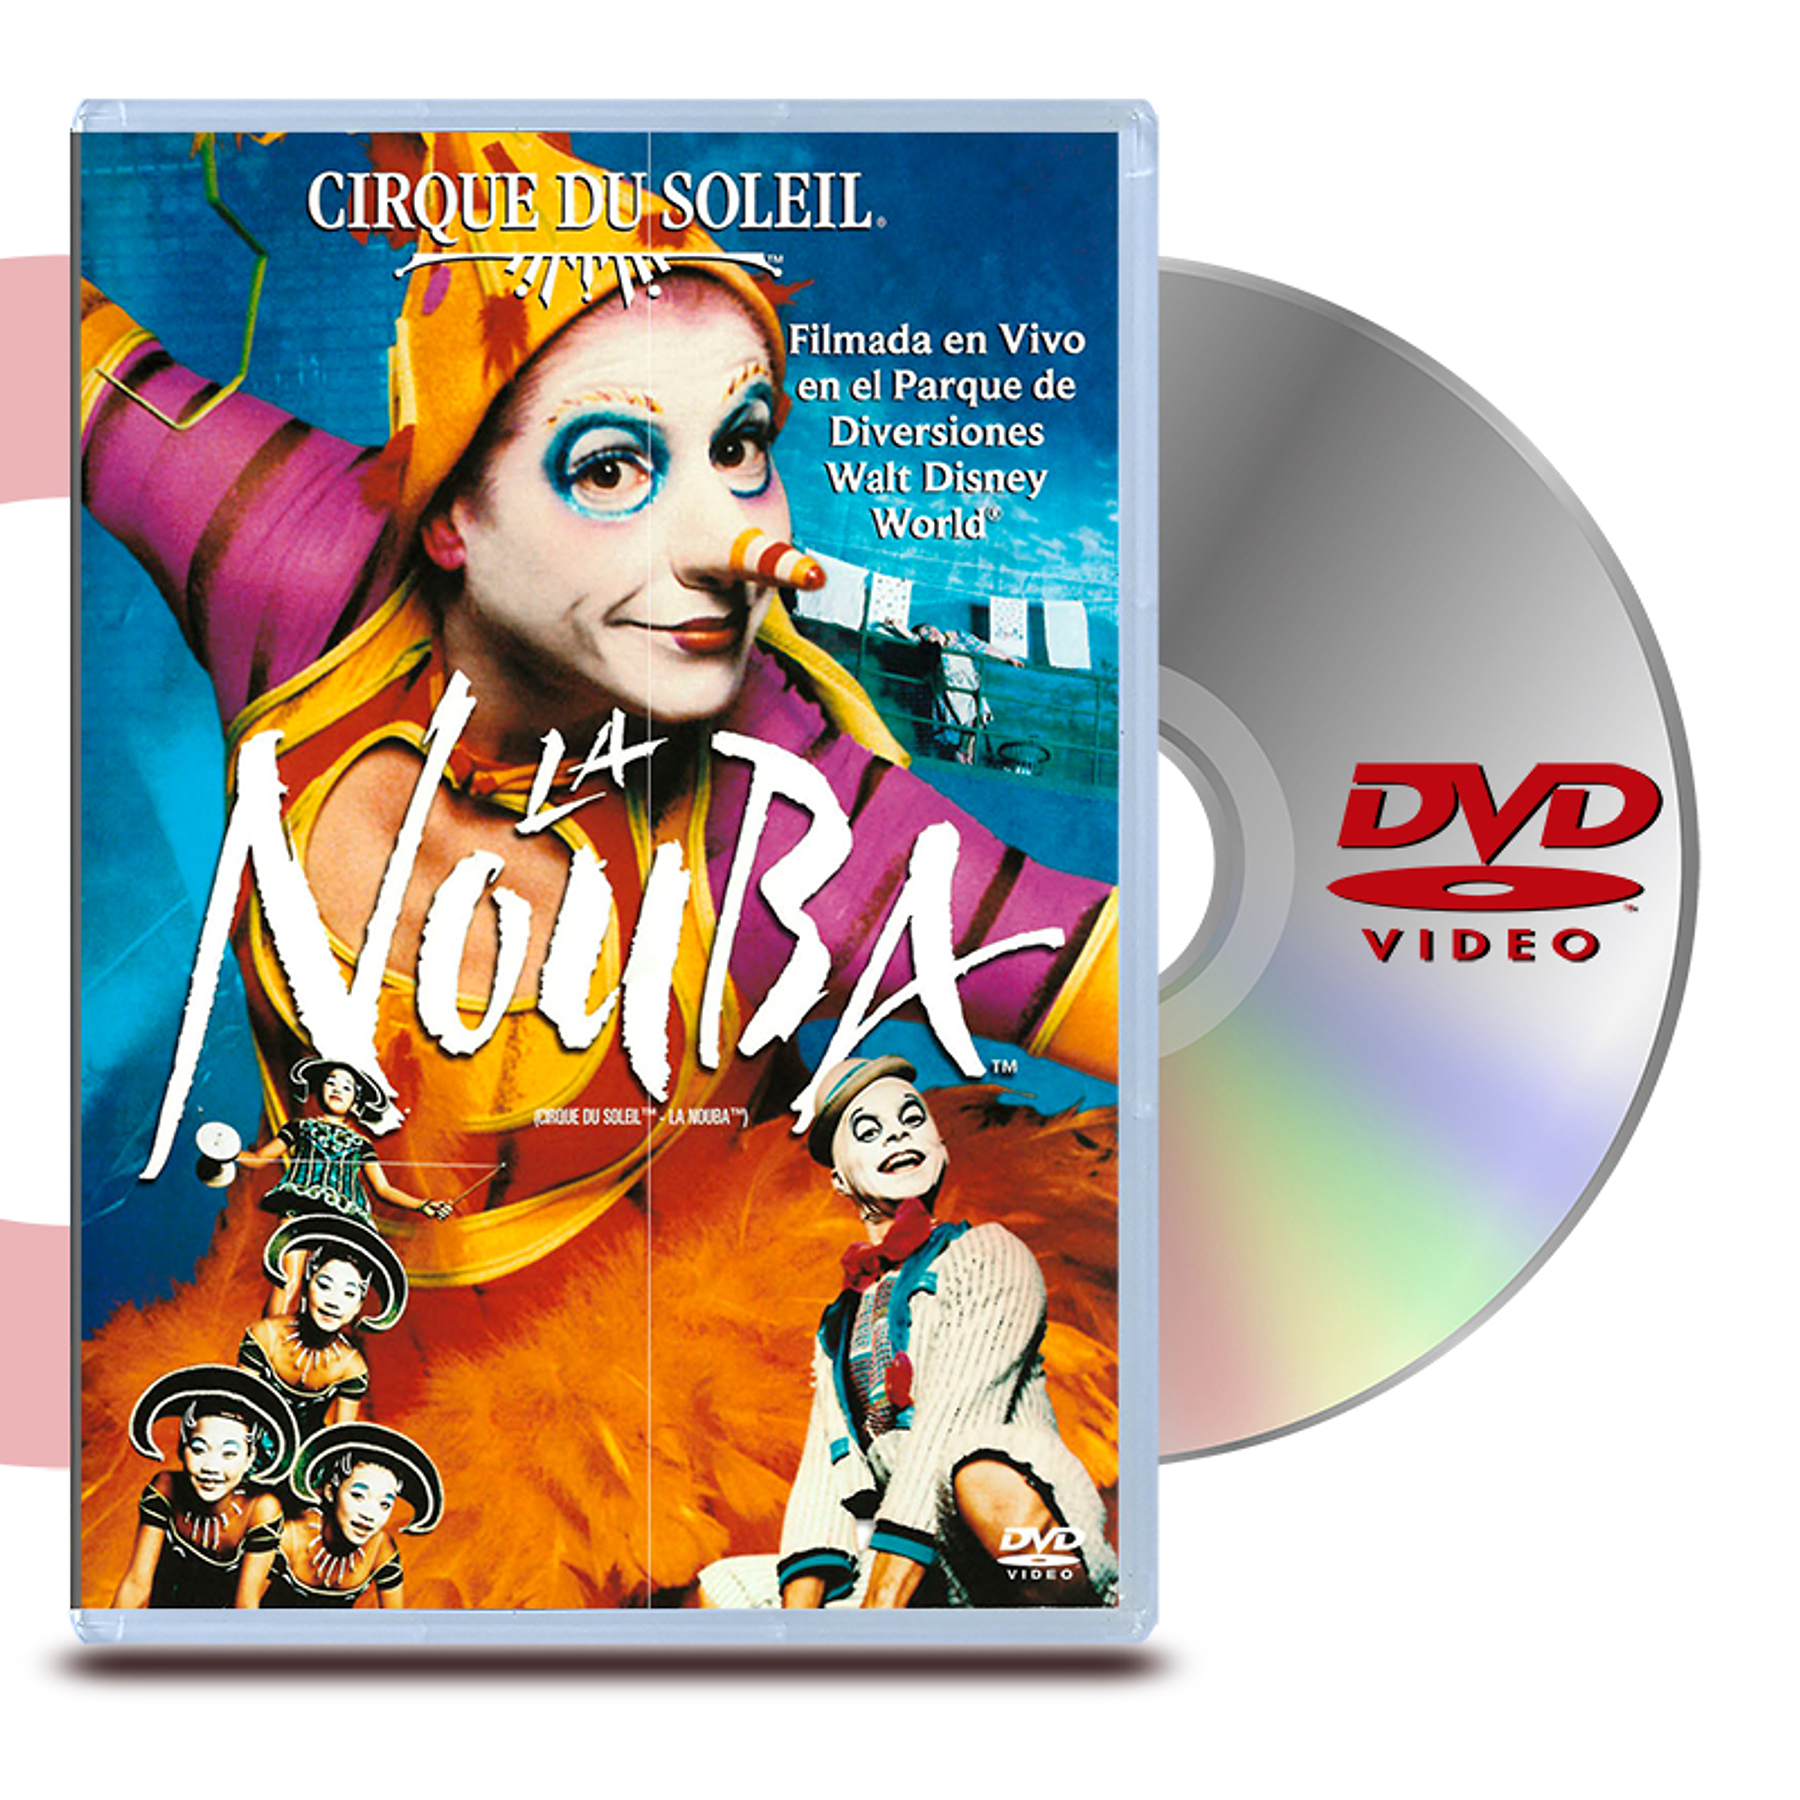 DVD Circo Do Soleil, La Nouba